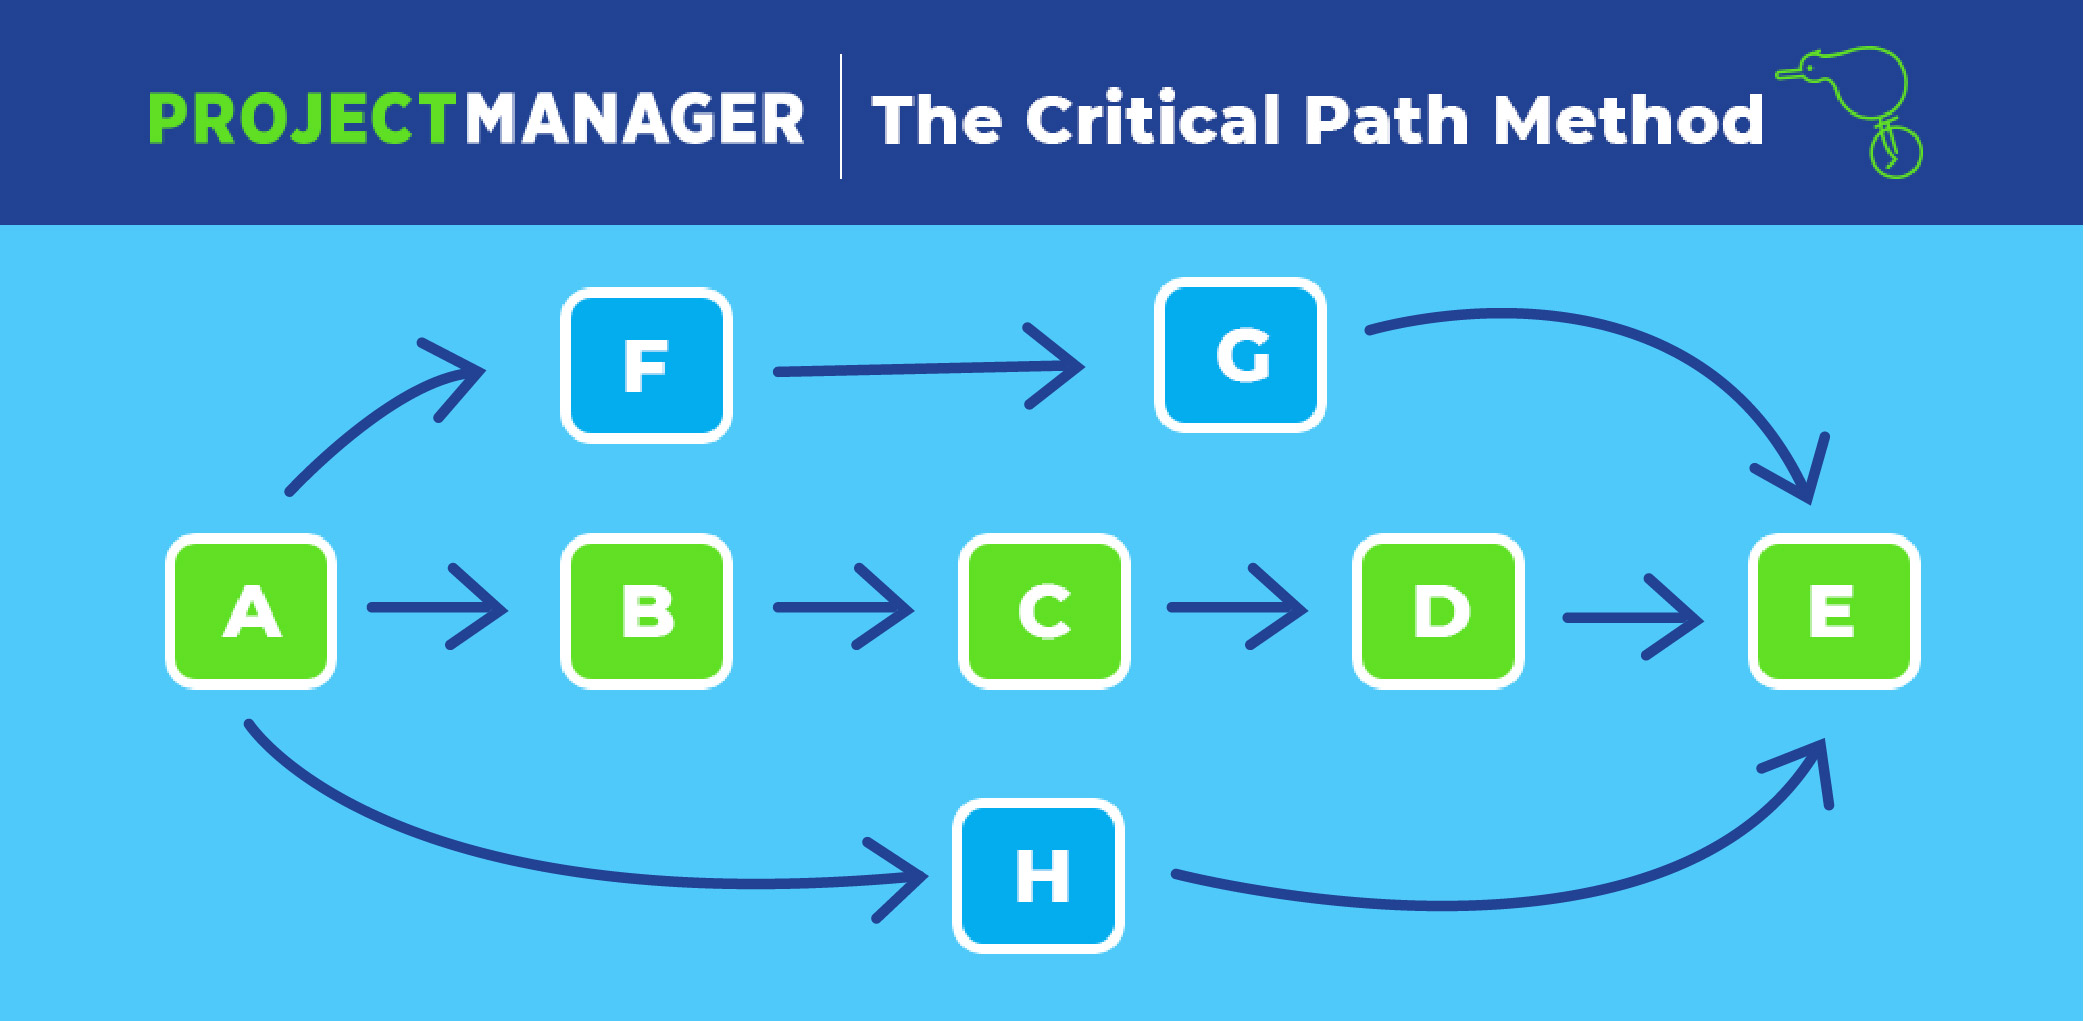 critical path method presentation